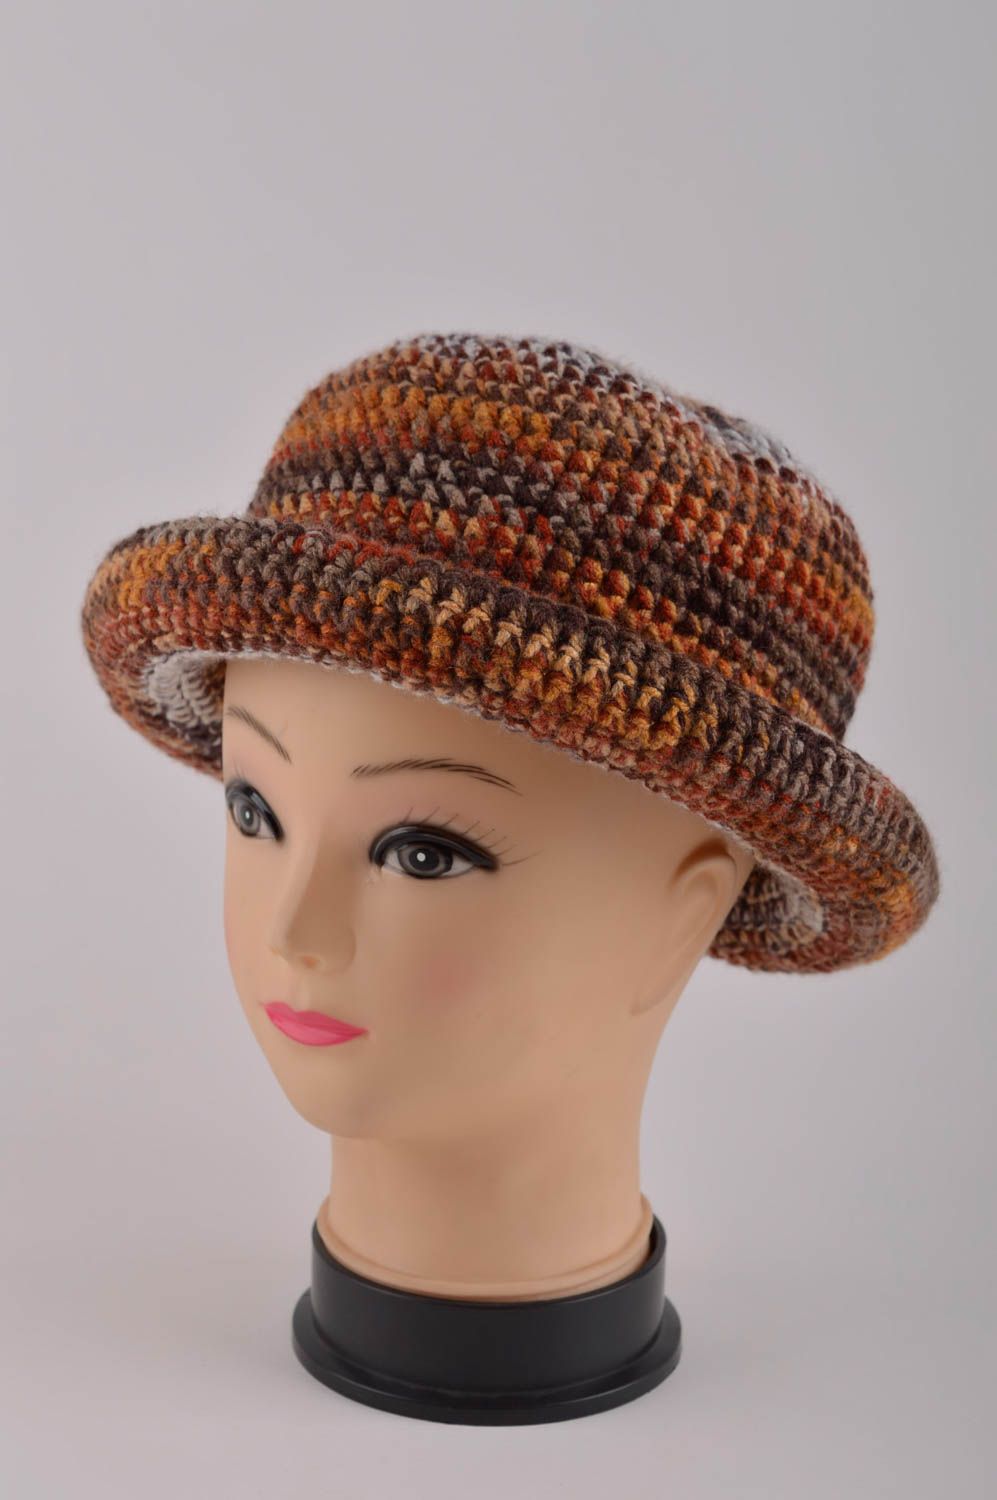 Handmade ladies hat crochet hat designer accessories fashion hats gifts for her photo 2